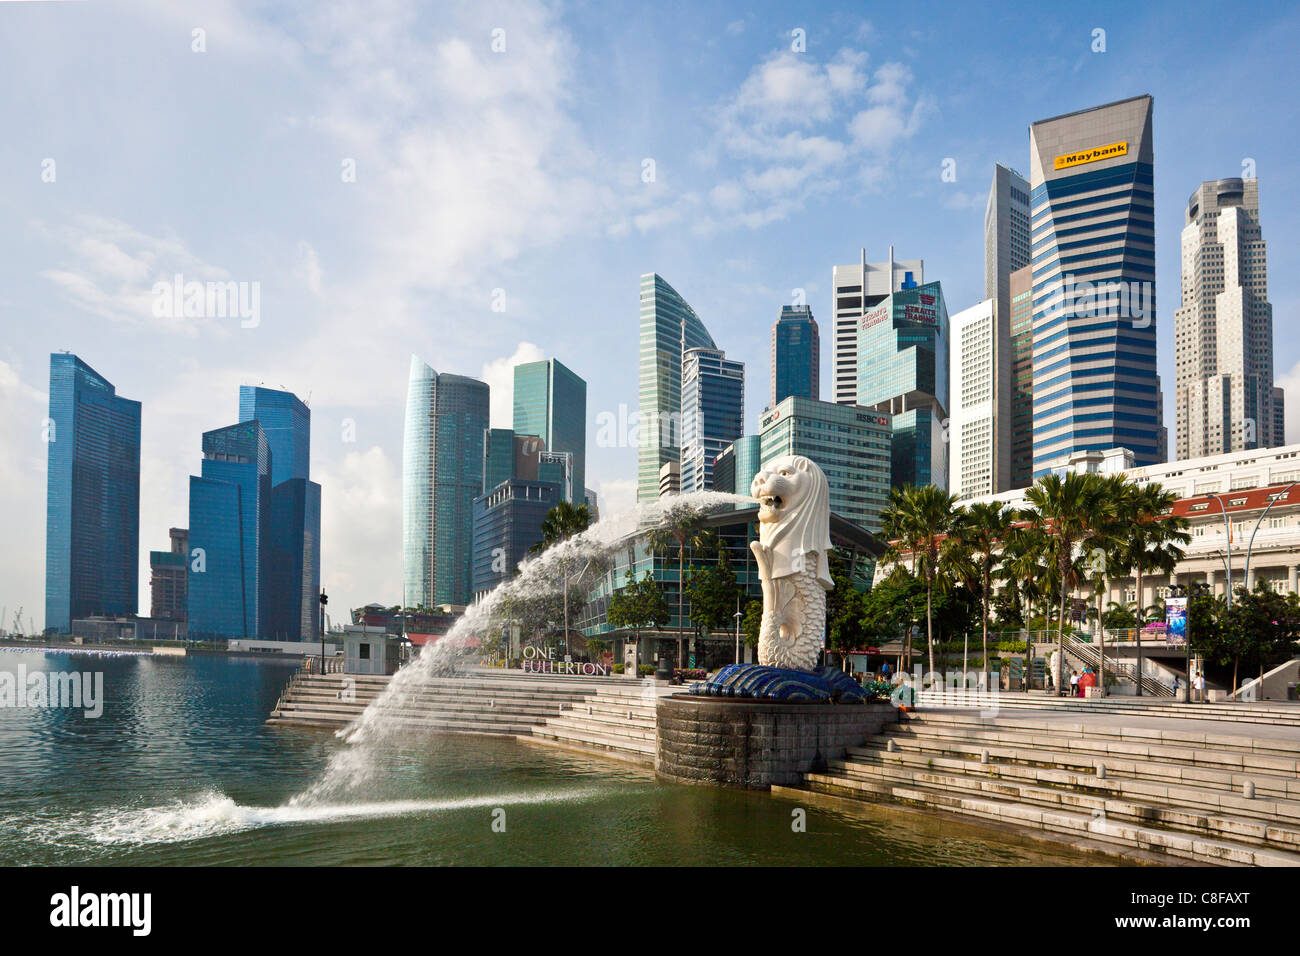 Singapore, Asia, Merlion, landmark, lion, mermaid, sculpture, water vomit, spit, bank promenade, stair, Skyline, town, city, Stock Photo